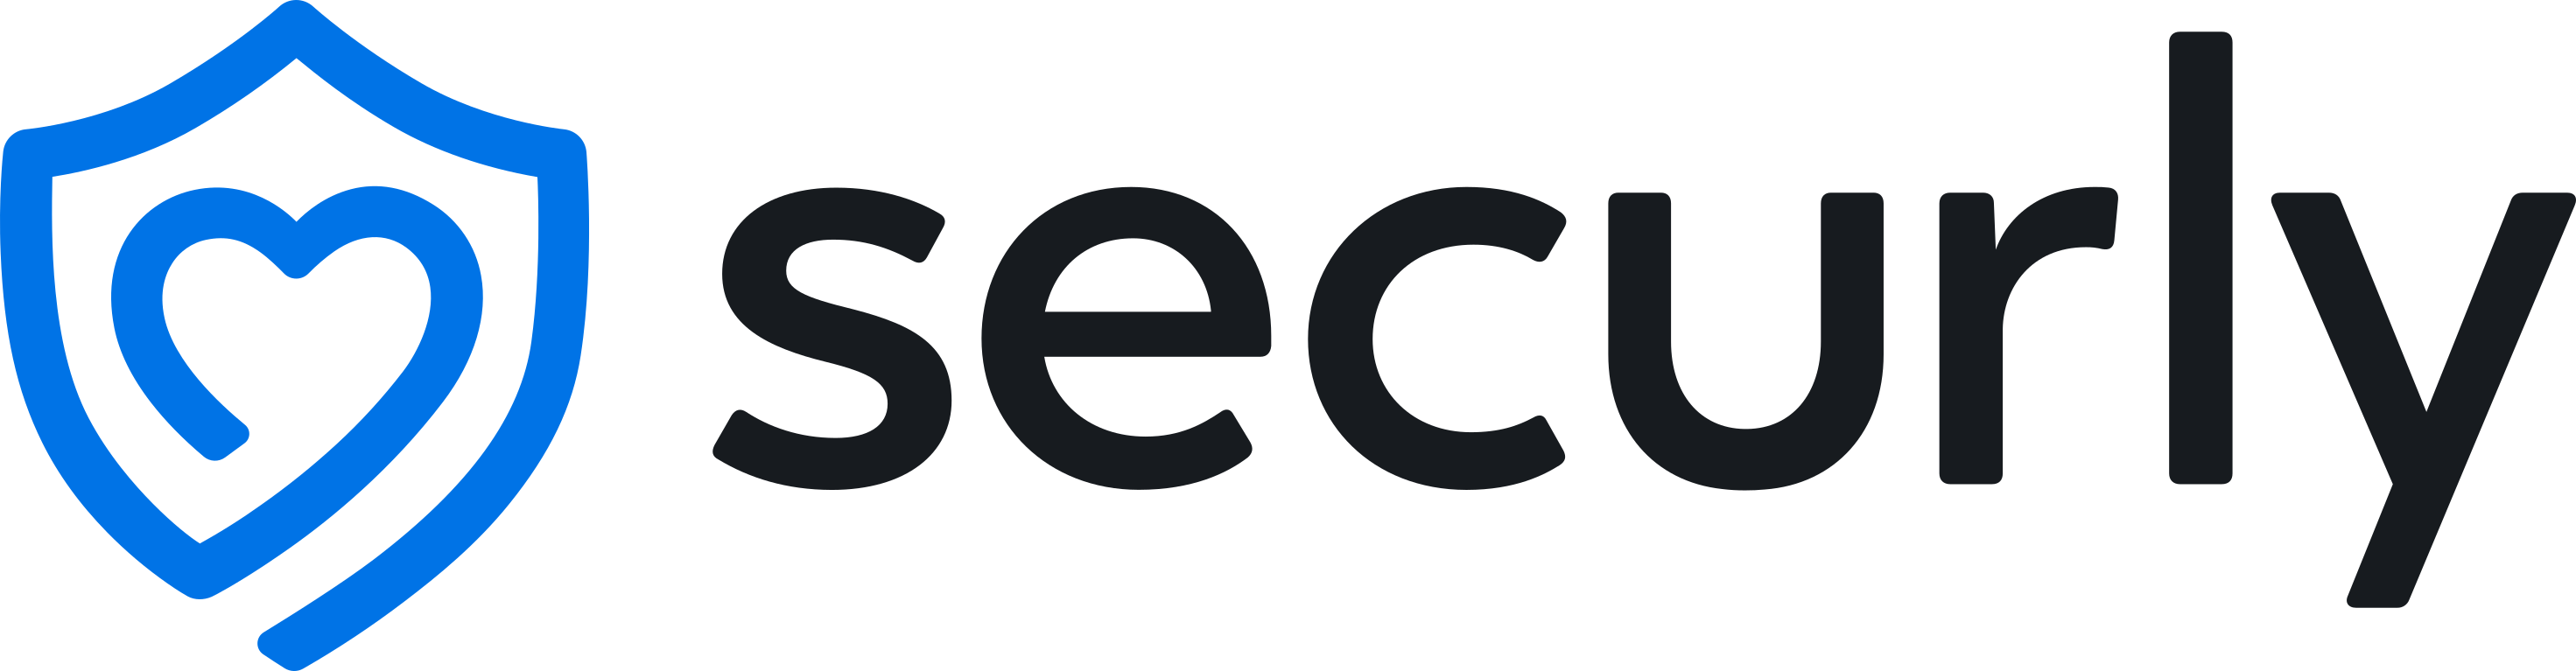 securly_logo